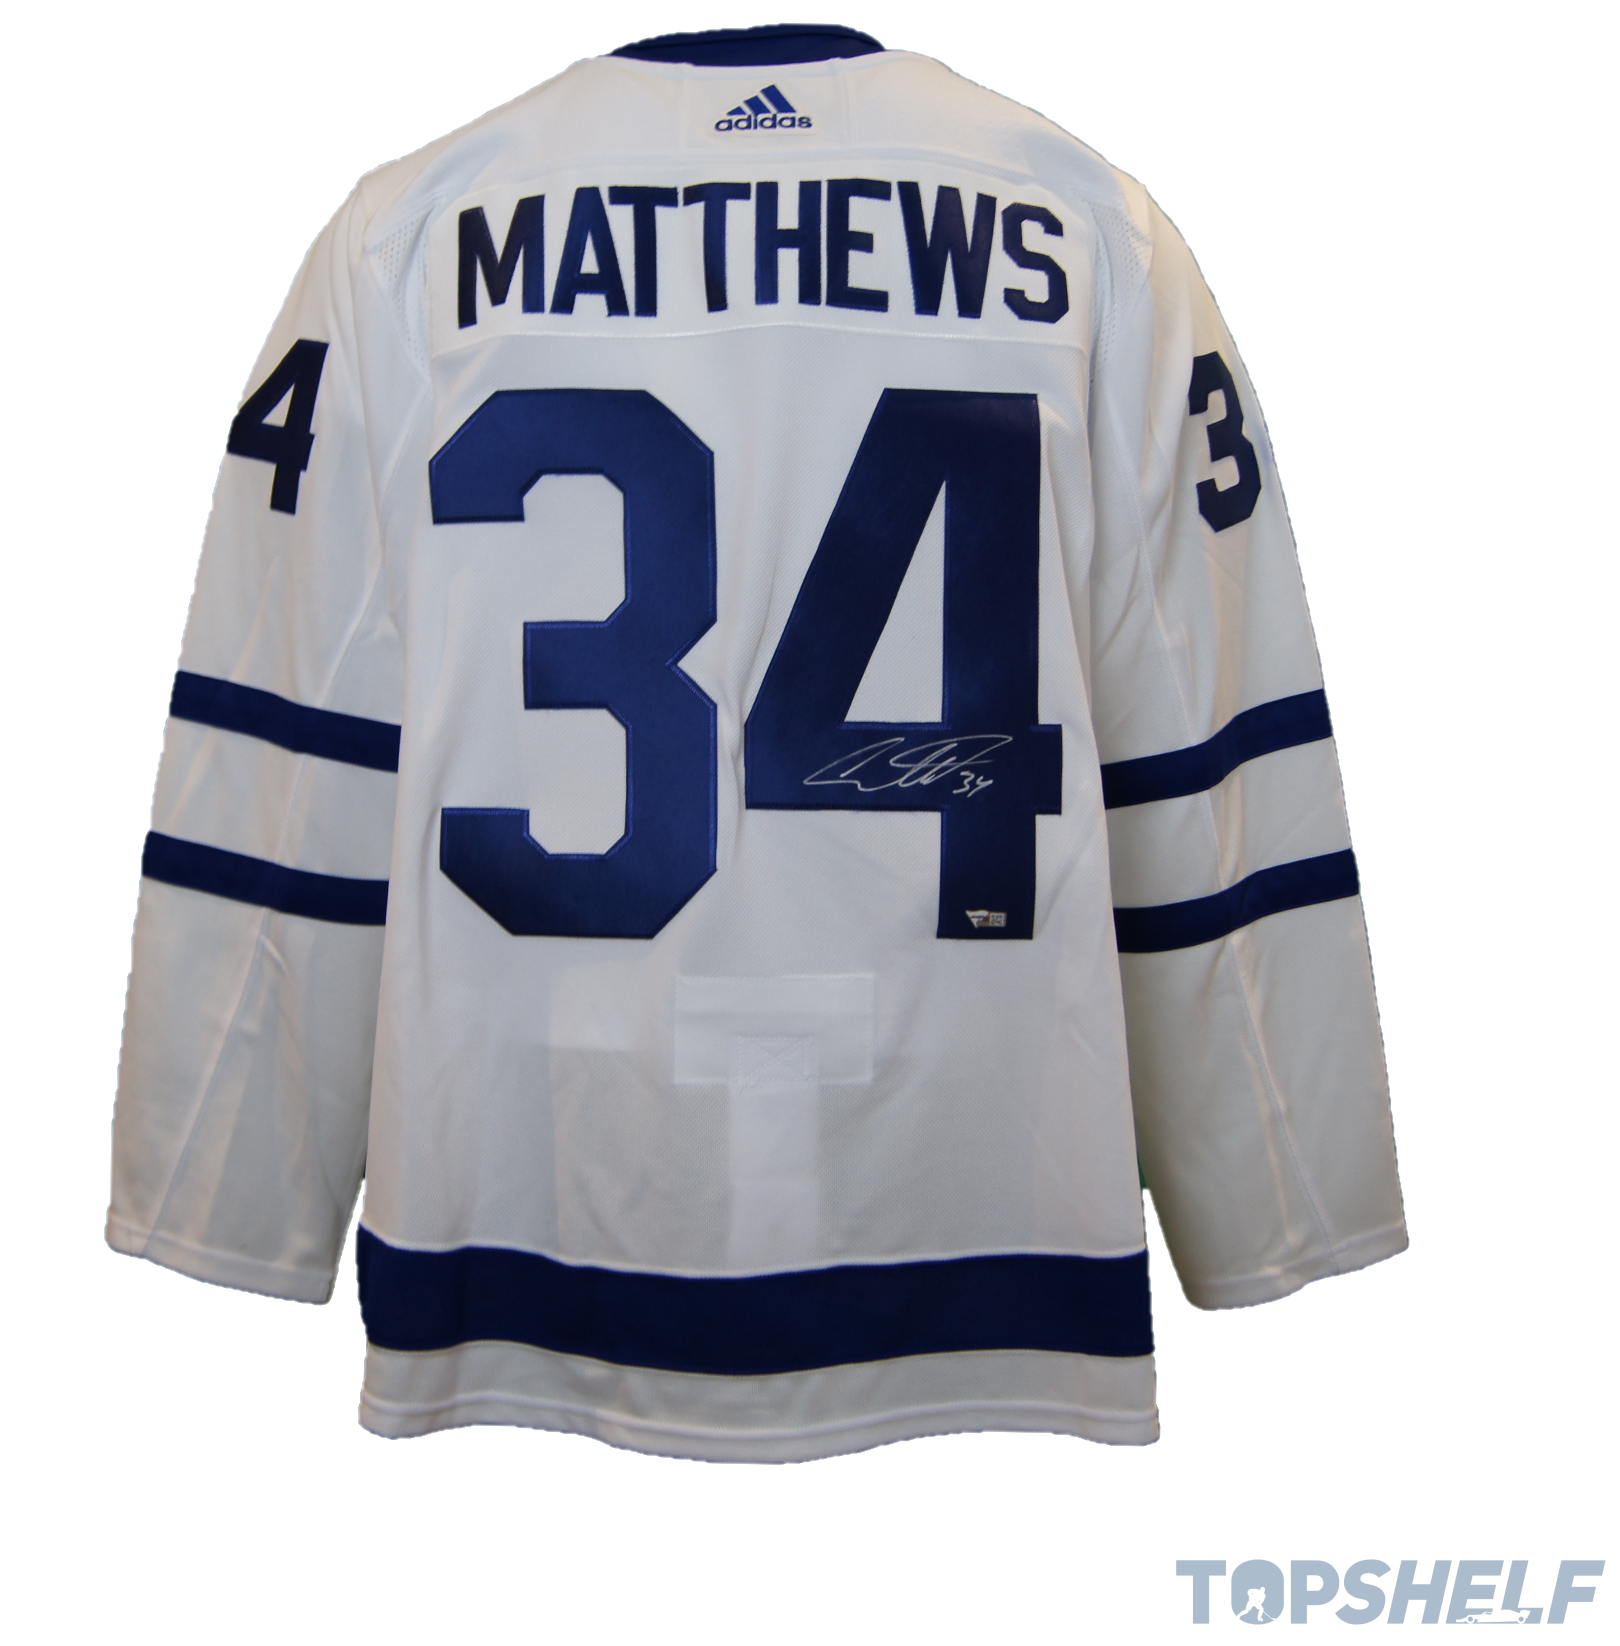 Auston Matthews Autographed Toronto Maple Leafs Away Jersey - Adidas Authentic